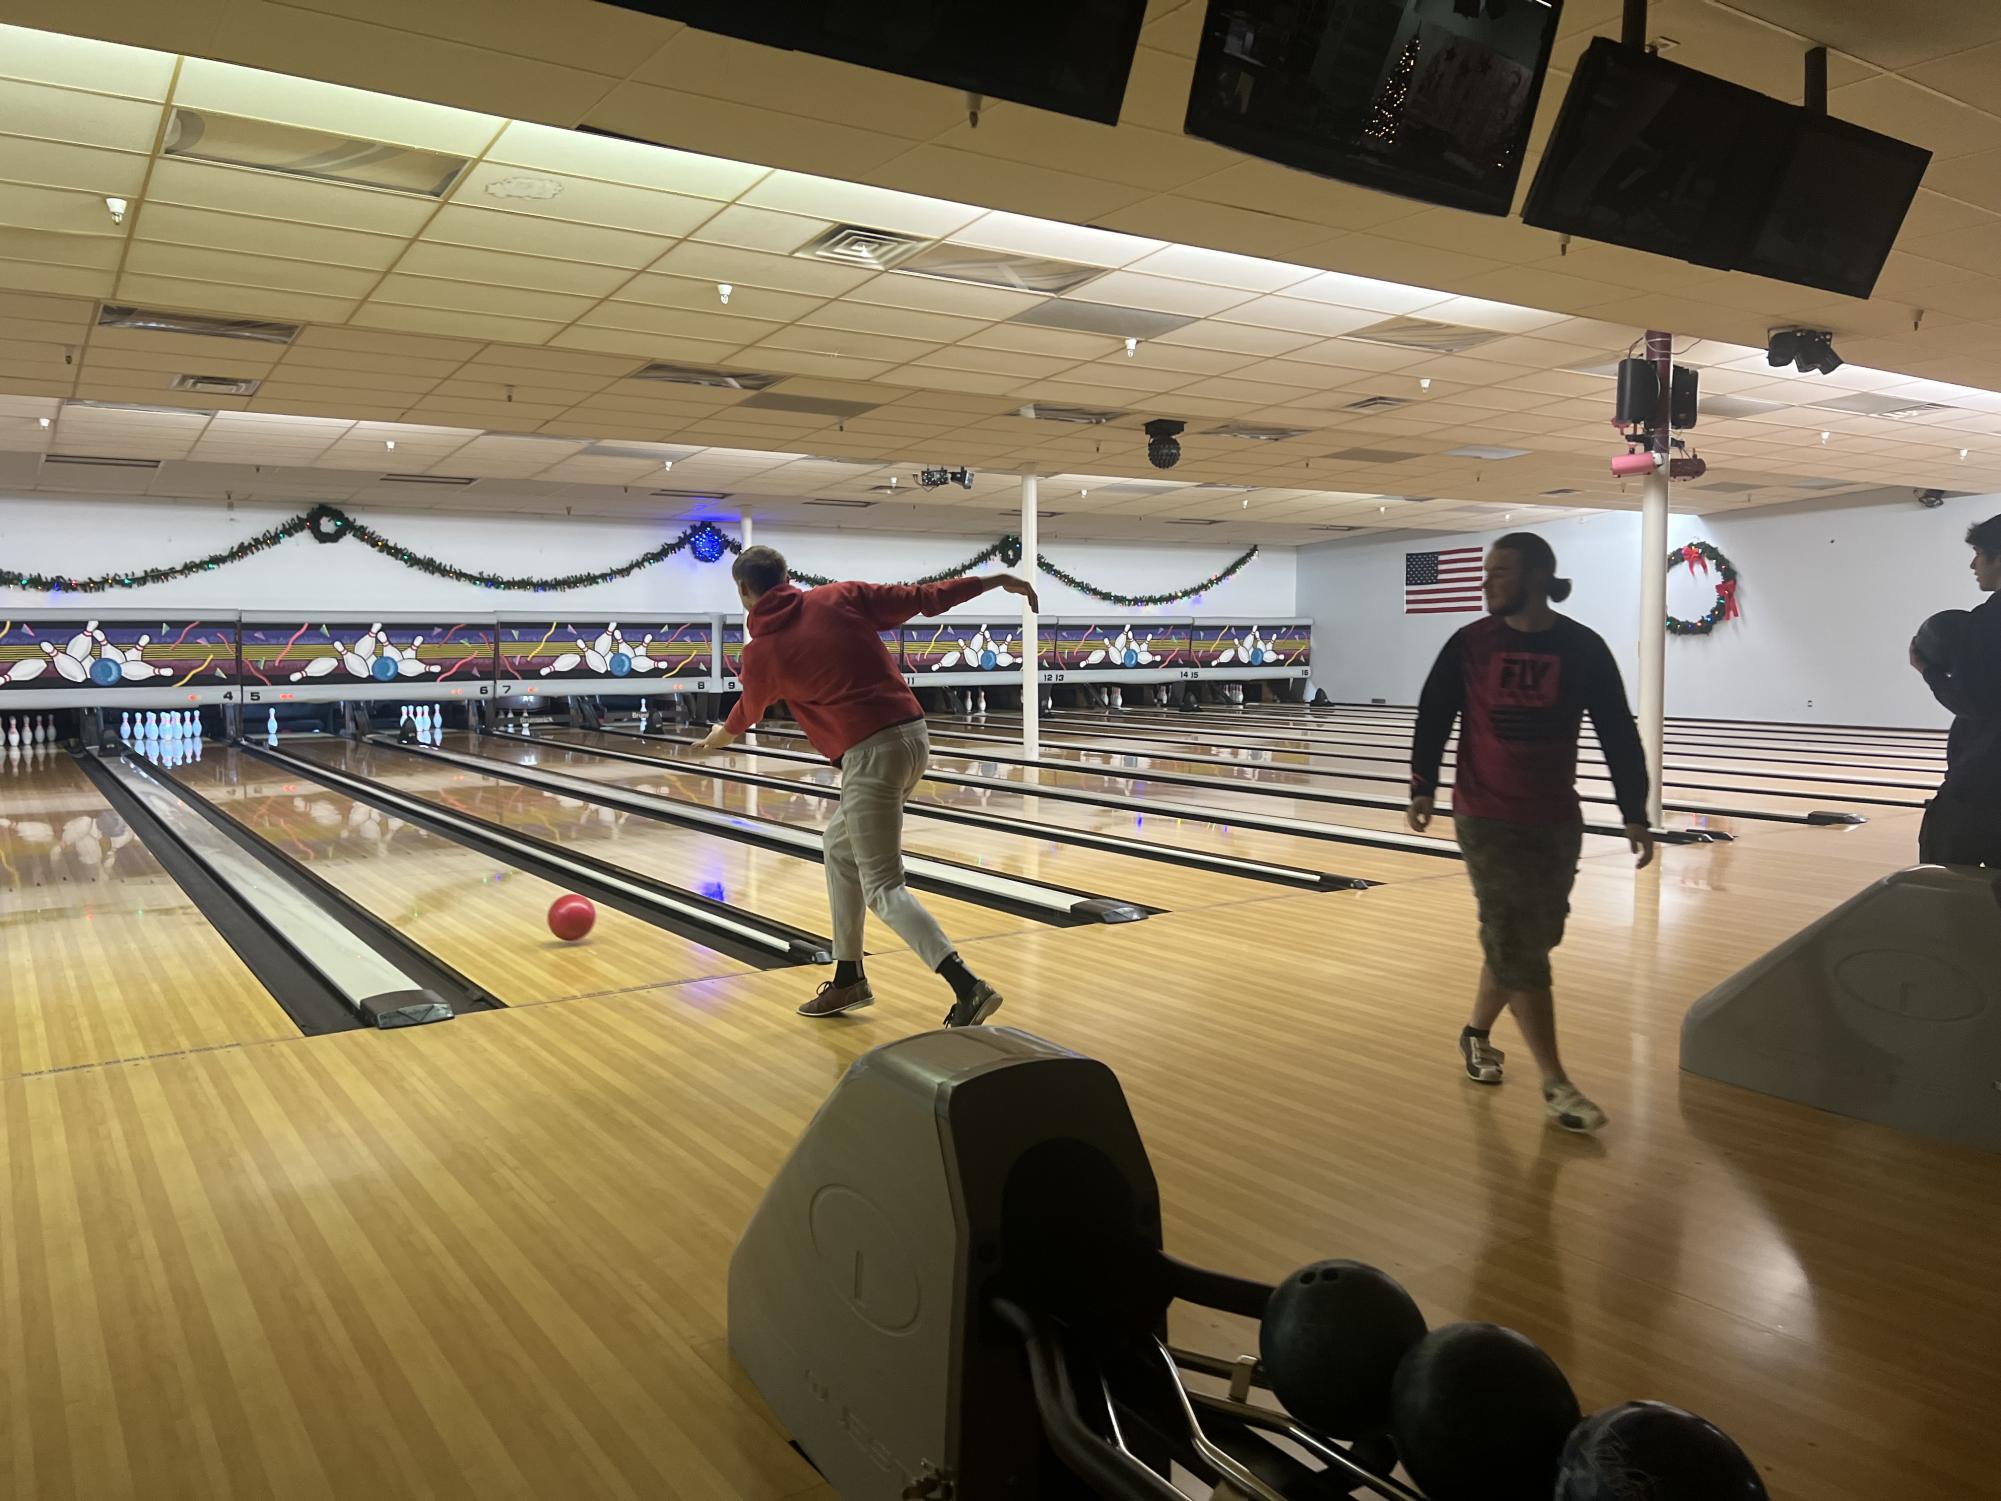 Mr. Lieserss lifetime activities class strike up the fun with bowling!